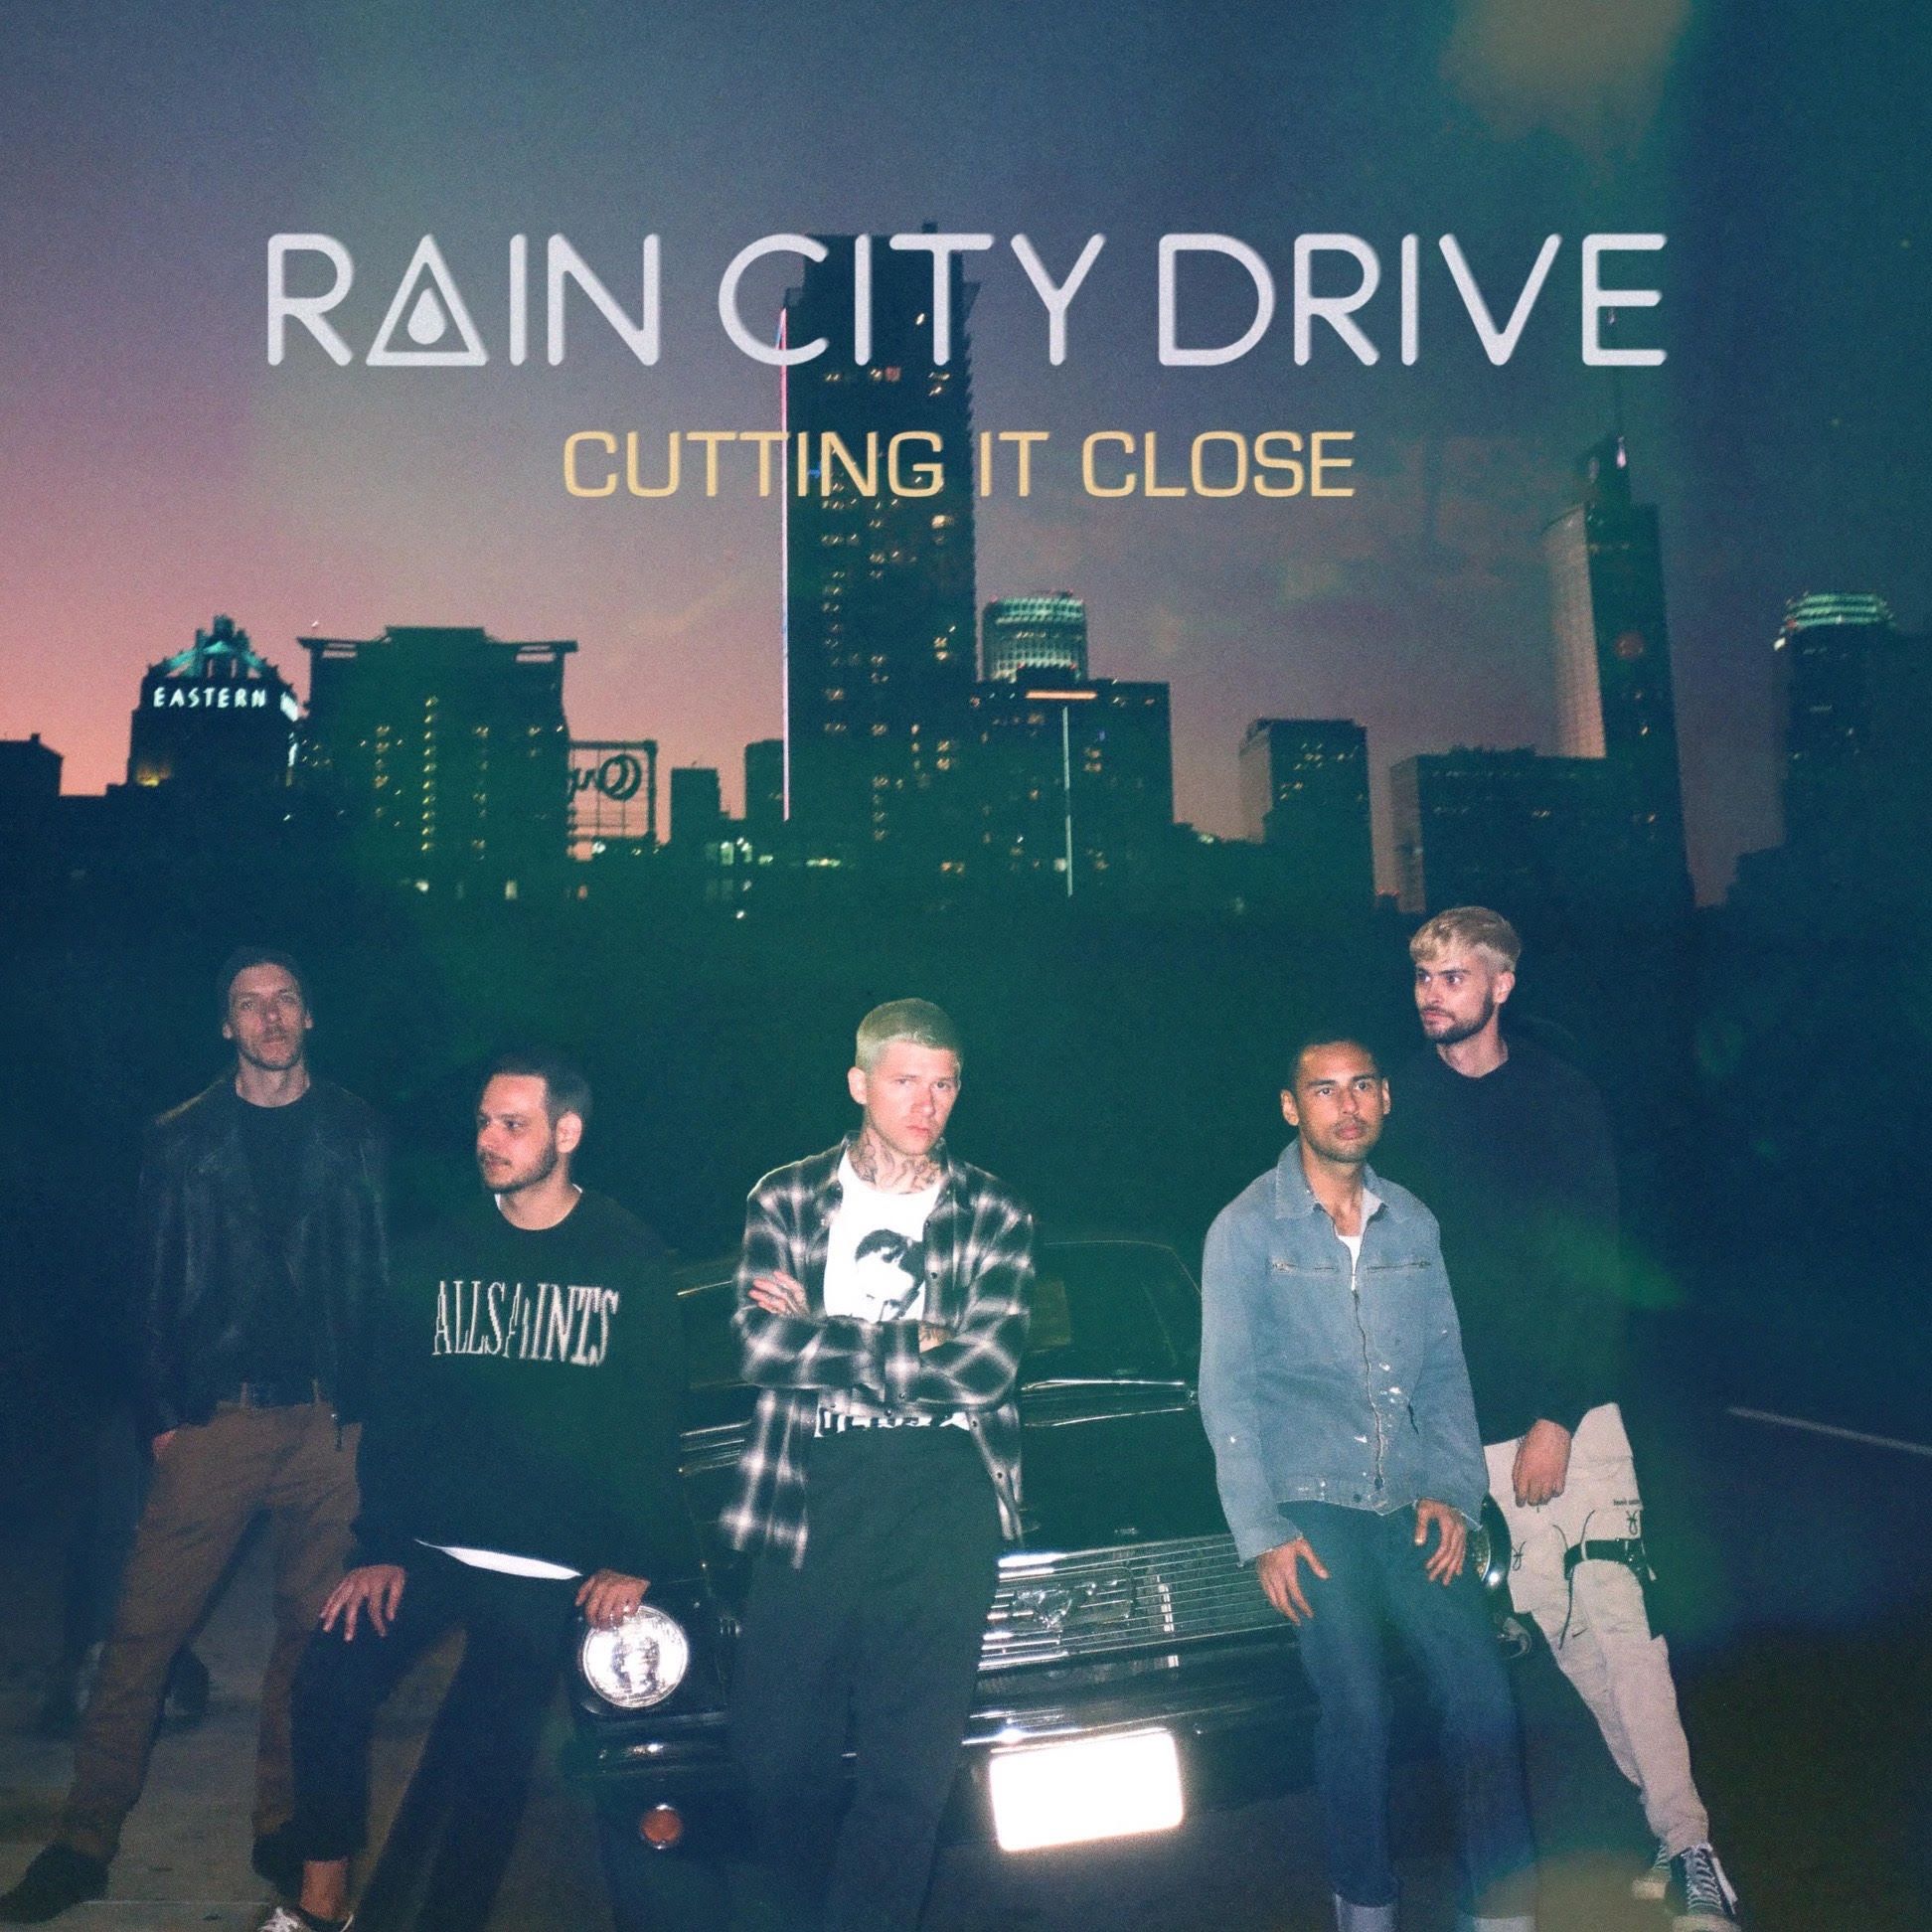 Rain City Drive 1 álbum da Discografia no LETRAS.MUS.BR